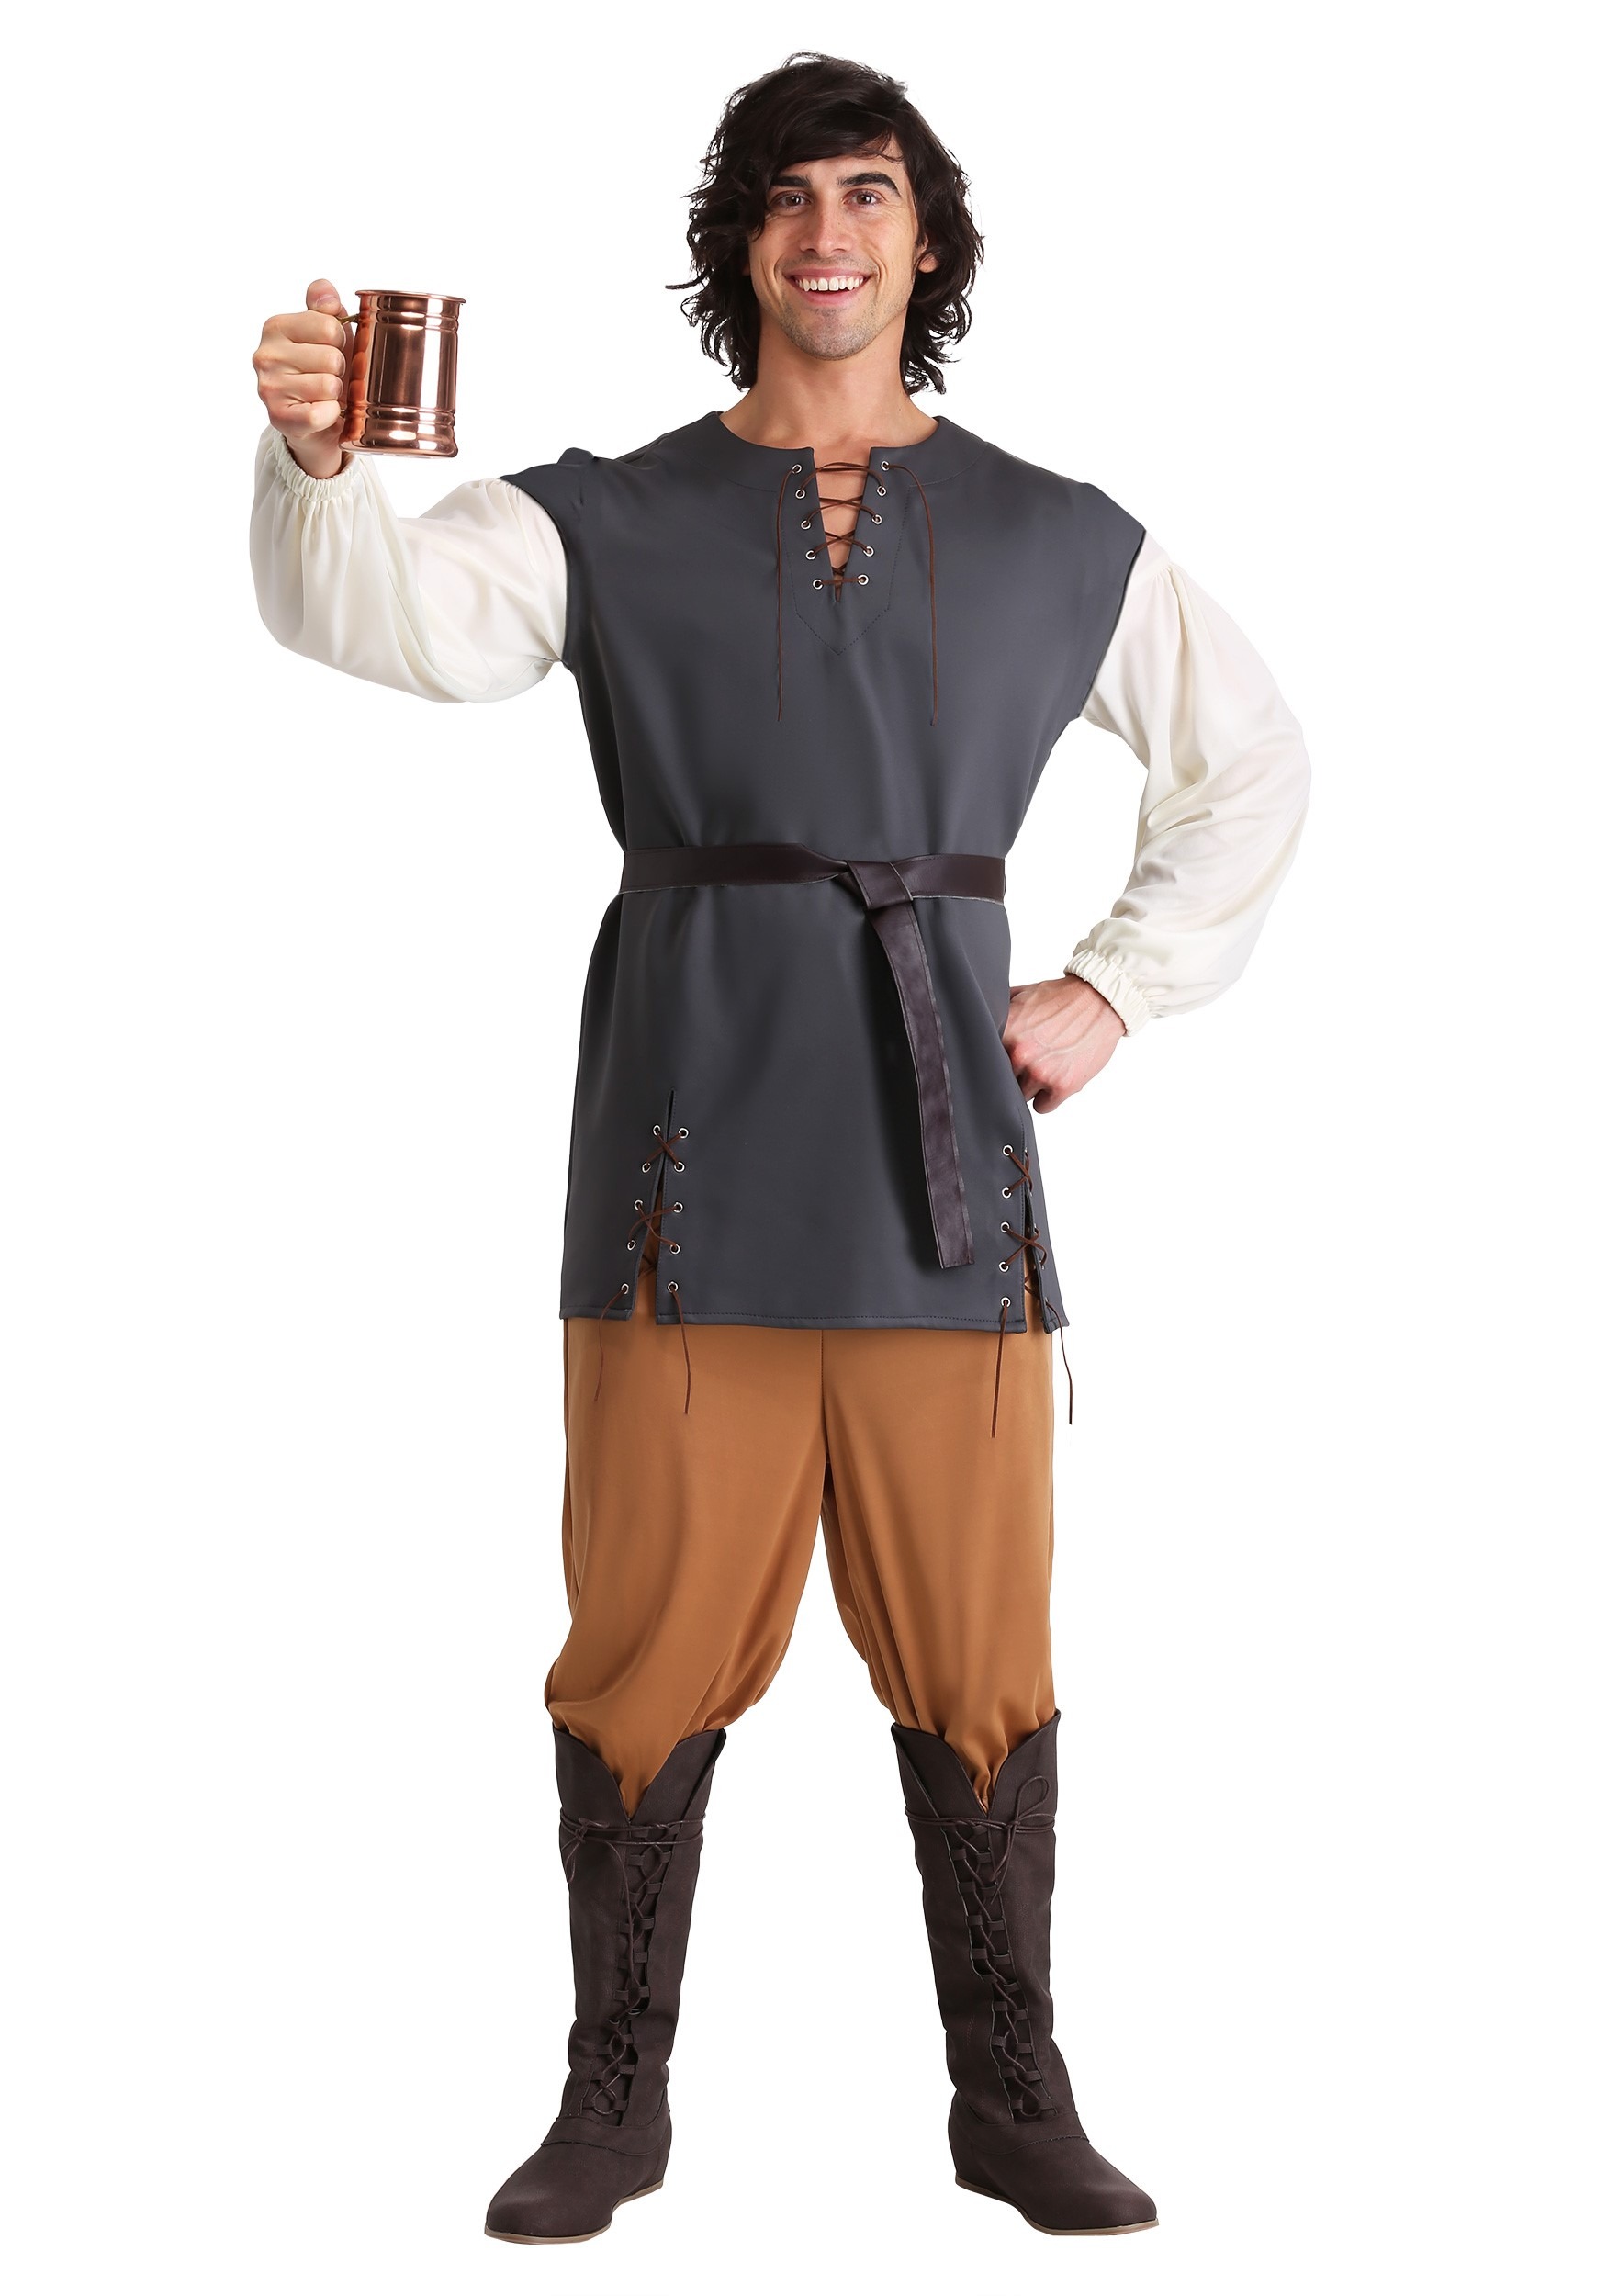 homemade medieval costumes for men